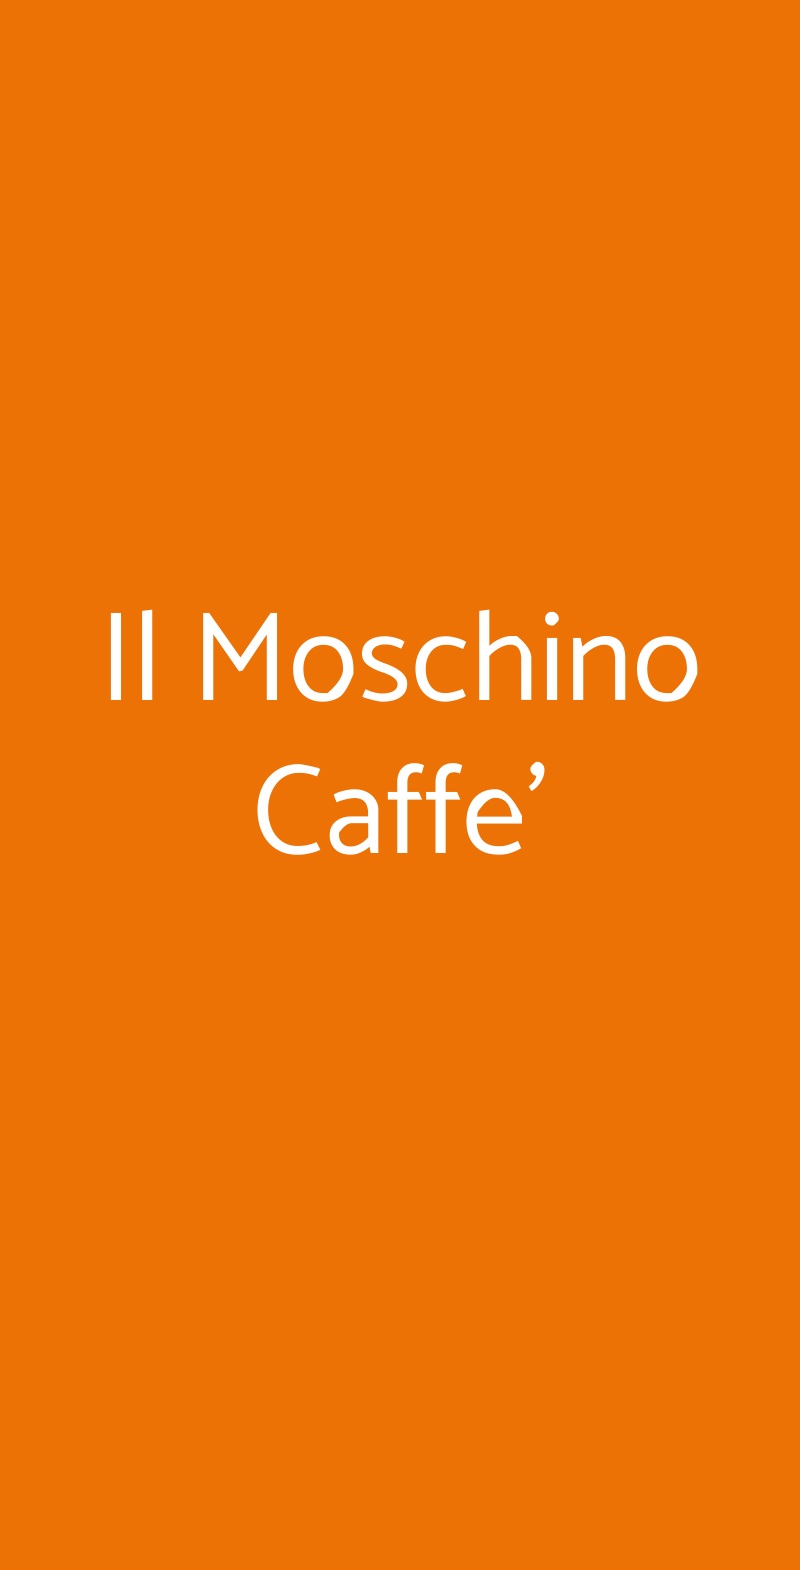 Il Moschino Caffe' Torino menù 1 pagina